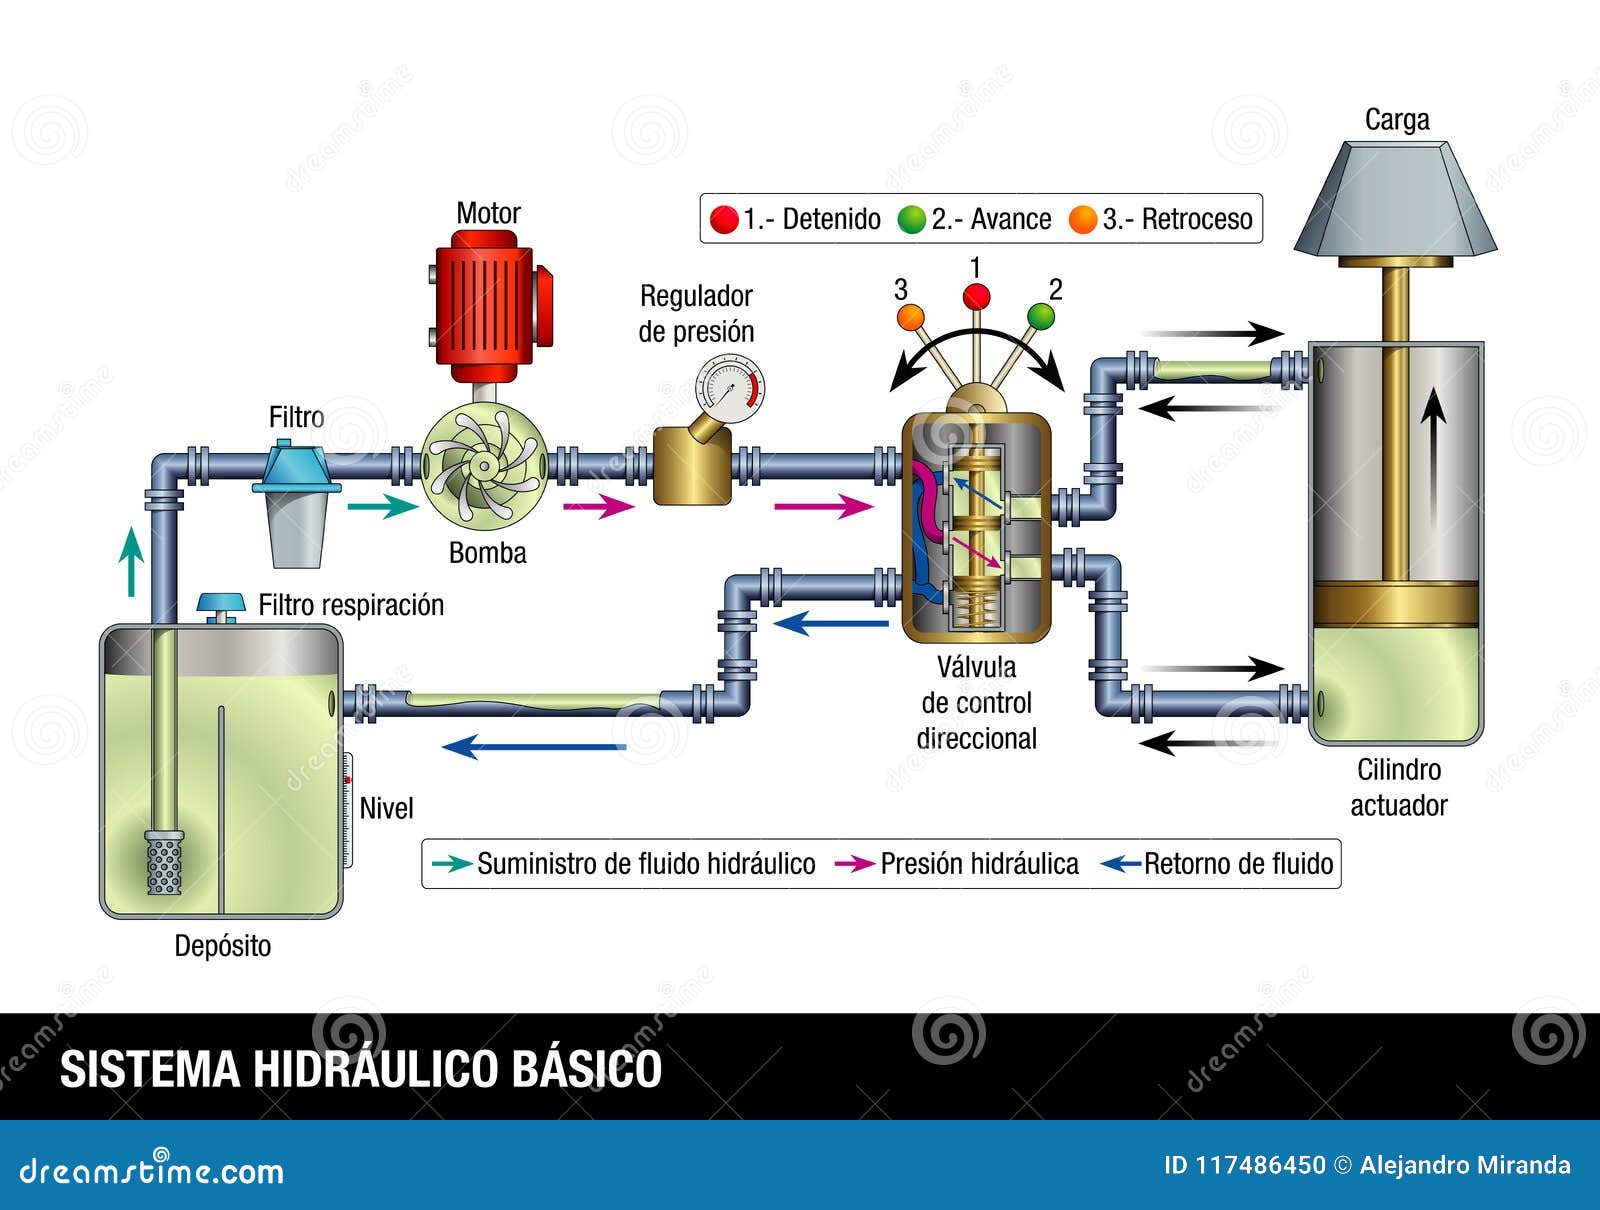 sistema hidraulico basico - basic hydraulic system in spanish language. explanatory diagram of the operation of a basic hydraulic